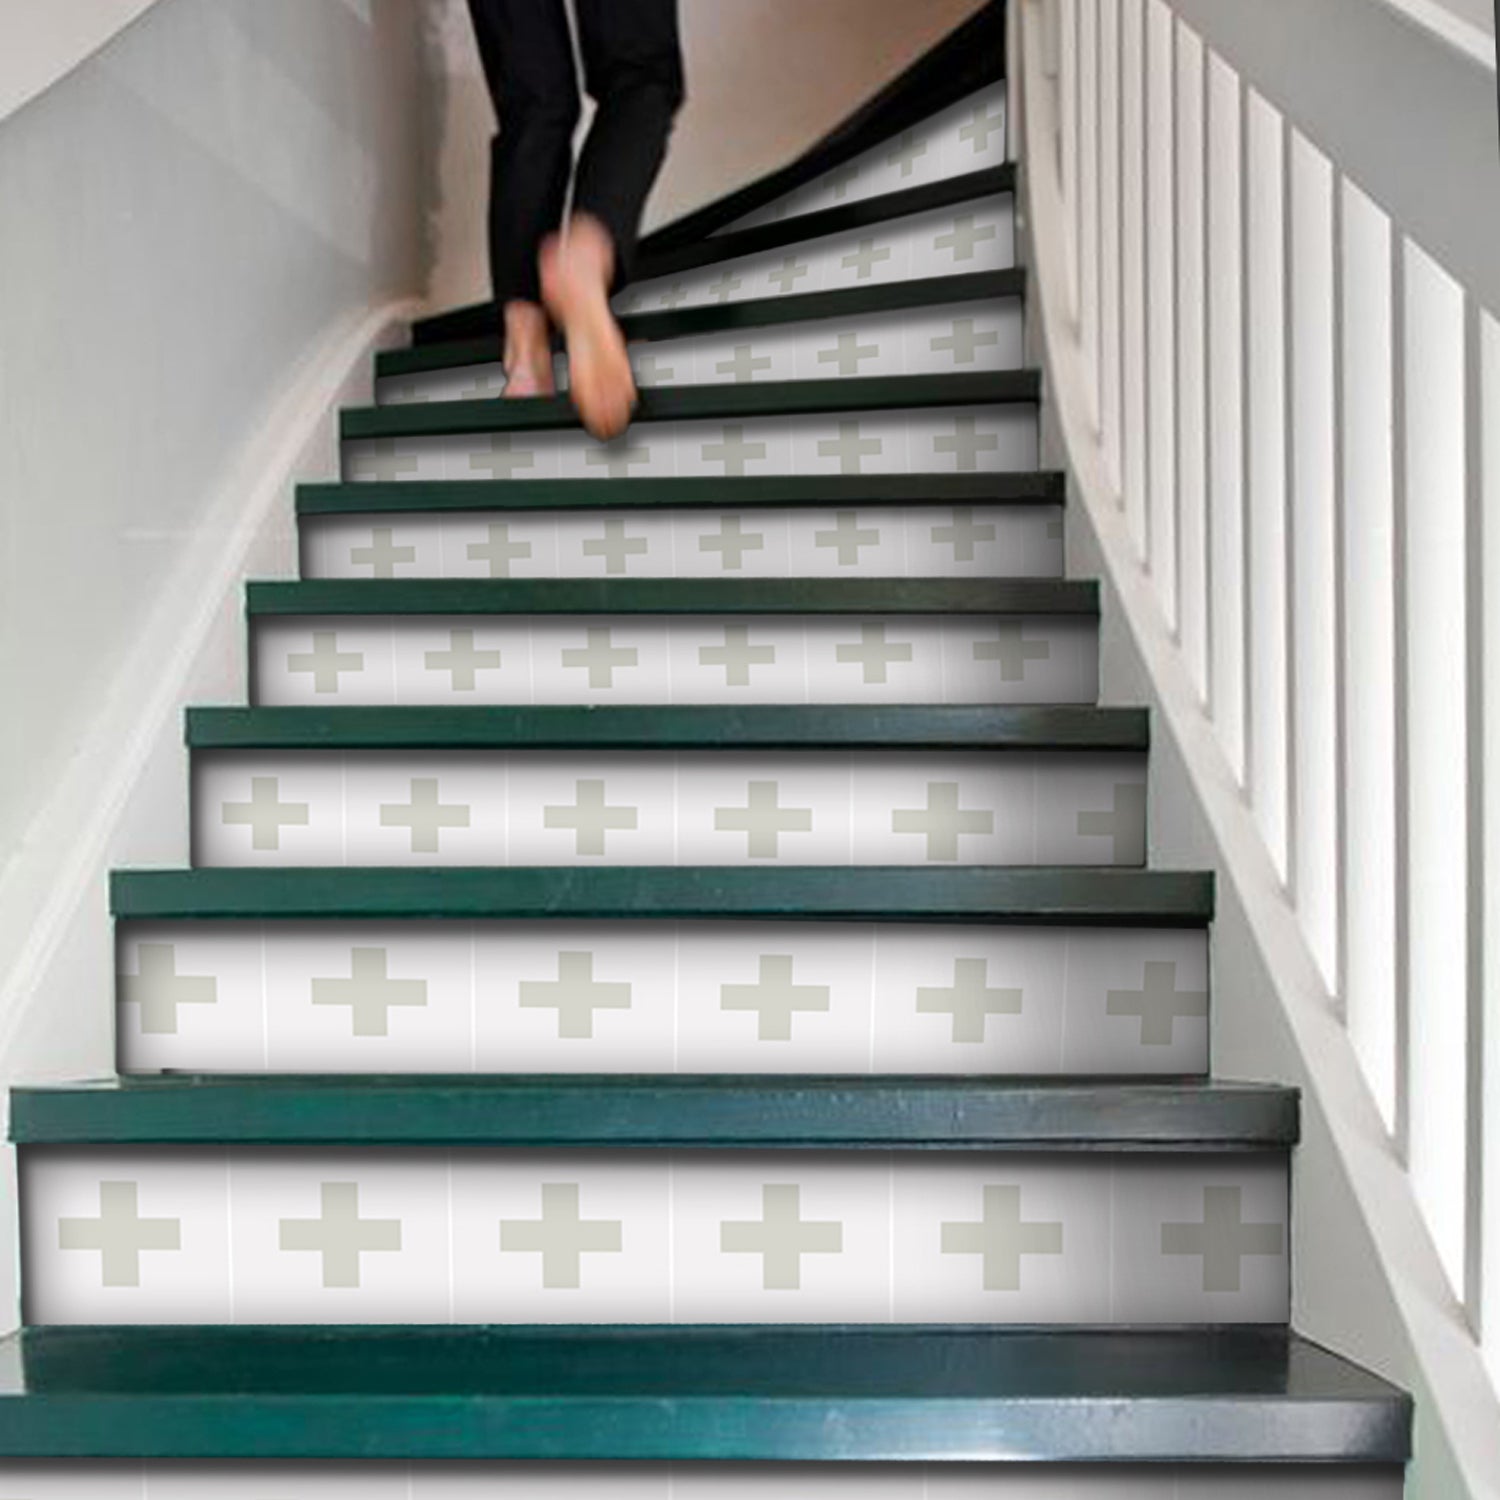 Christo Stair Riser Stickers